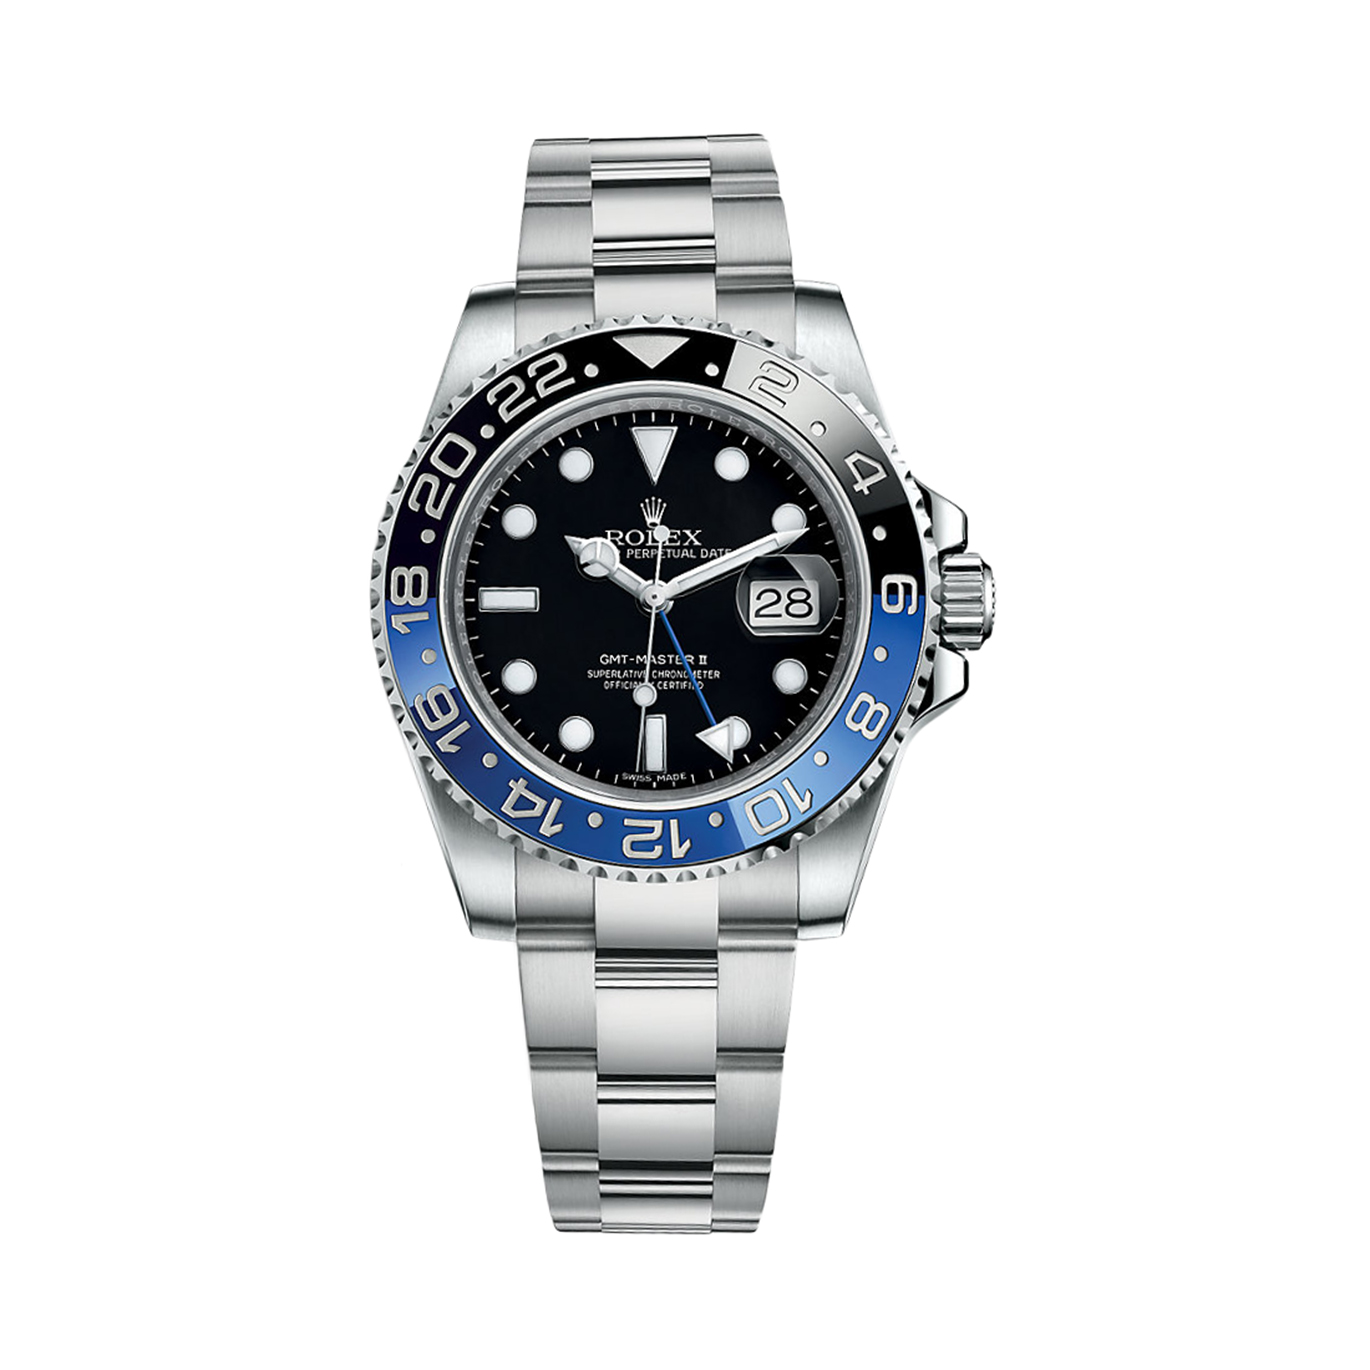 GMT-Master II 116710BLNR Stainless Steel Watch (Black)